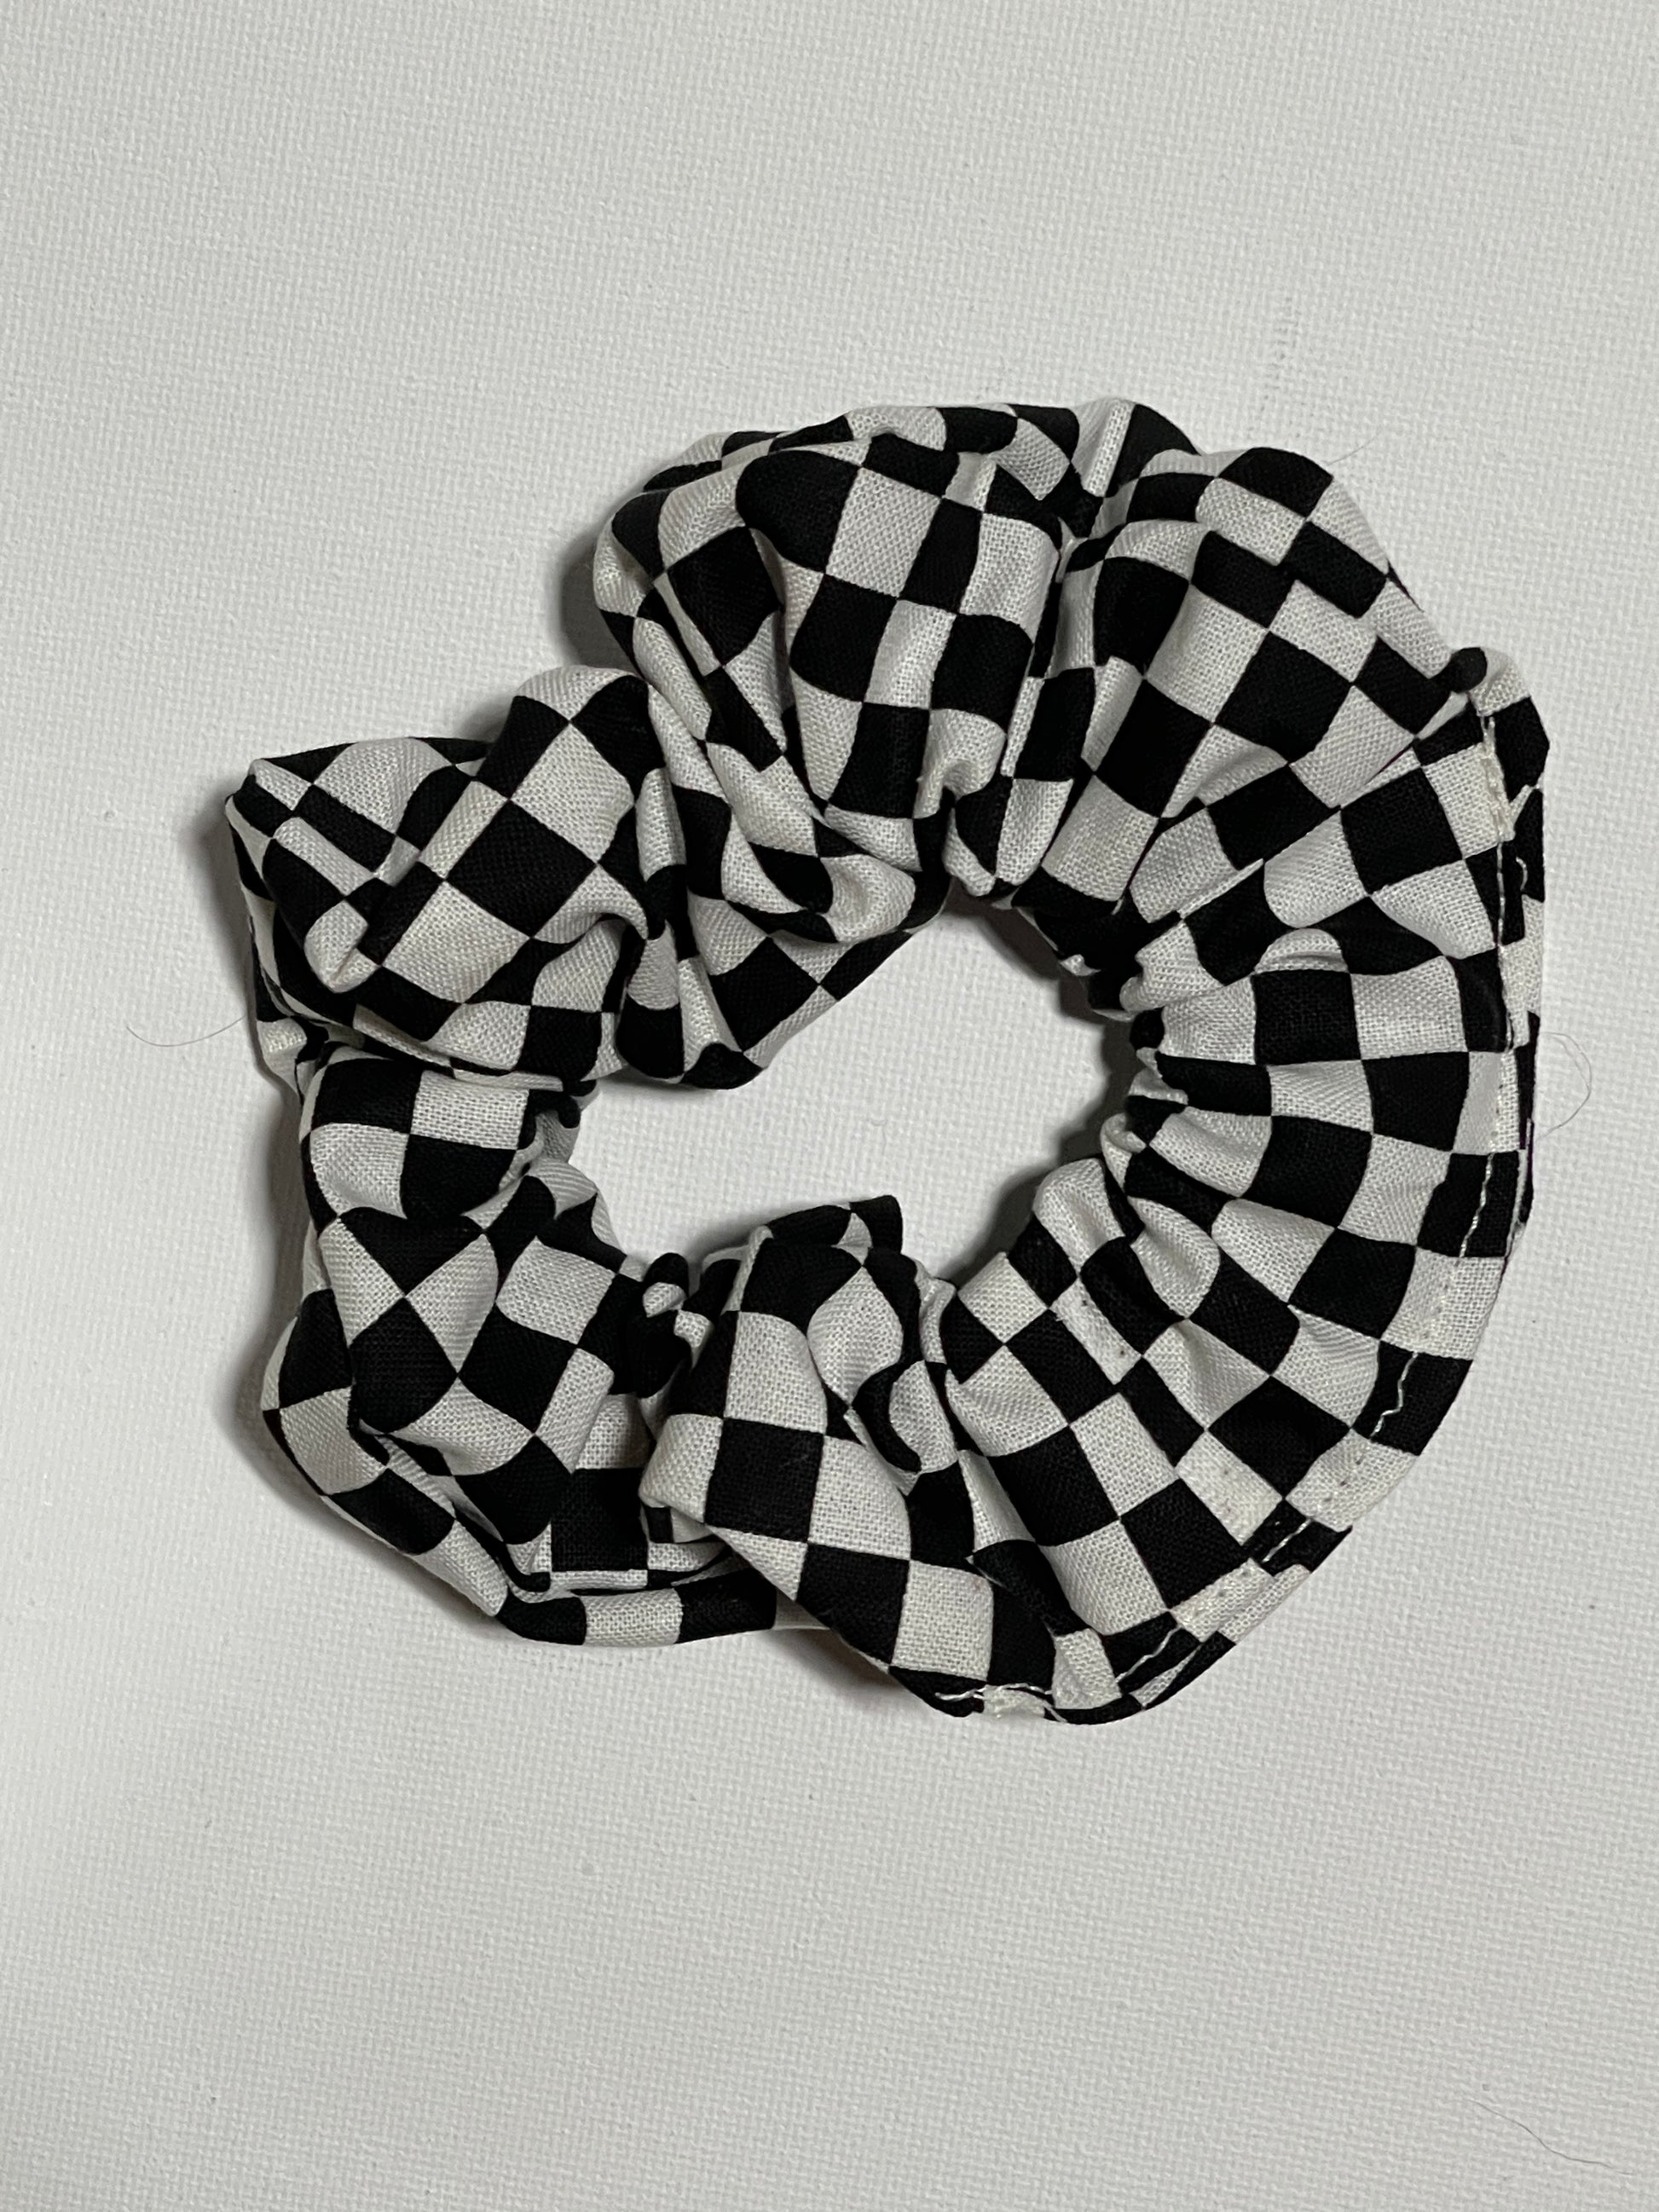 Black & White Checkered Cube Beaded Hair Ties - 2 Pack